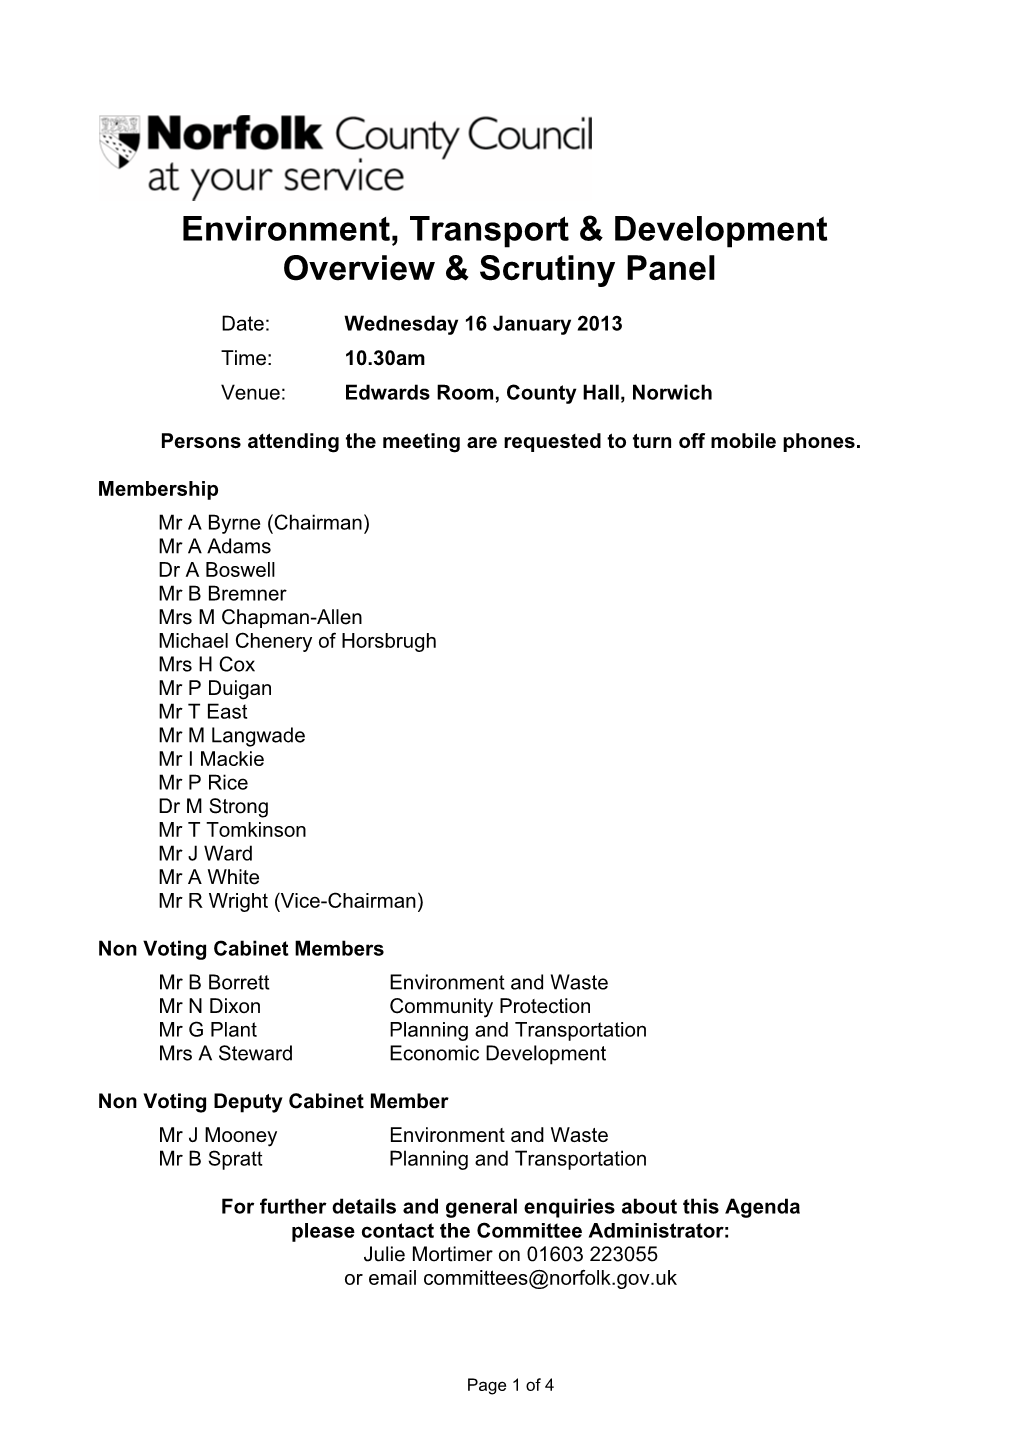 Environment, Transport & Development Overview & Scrutiny Panel